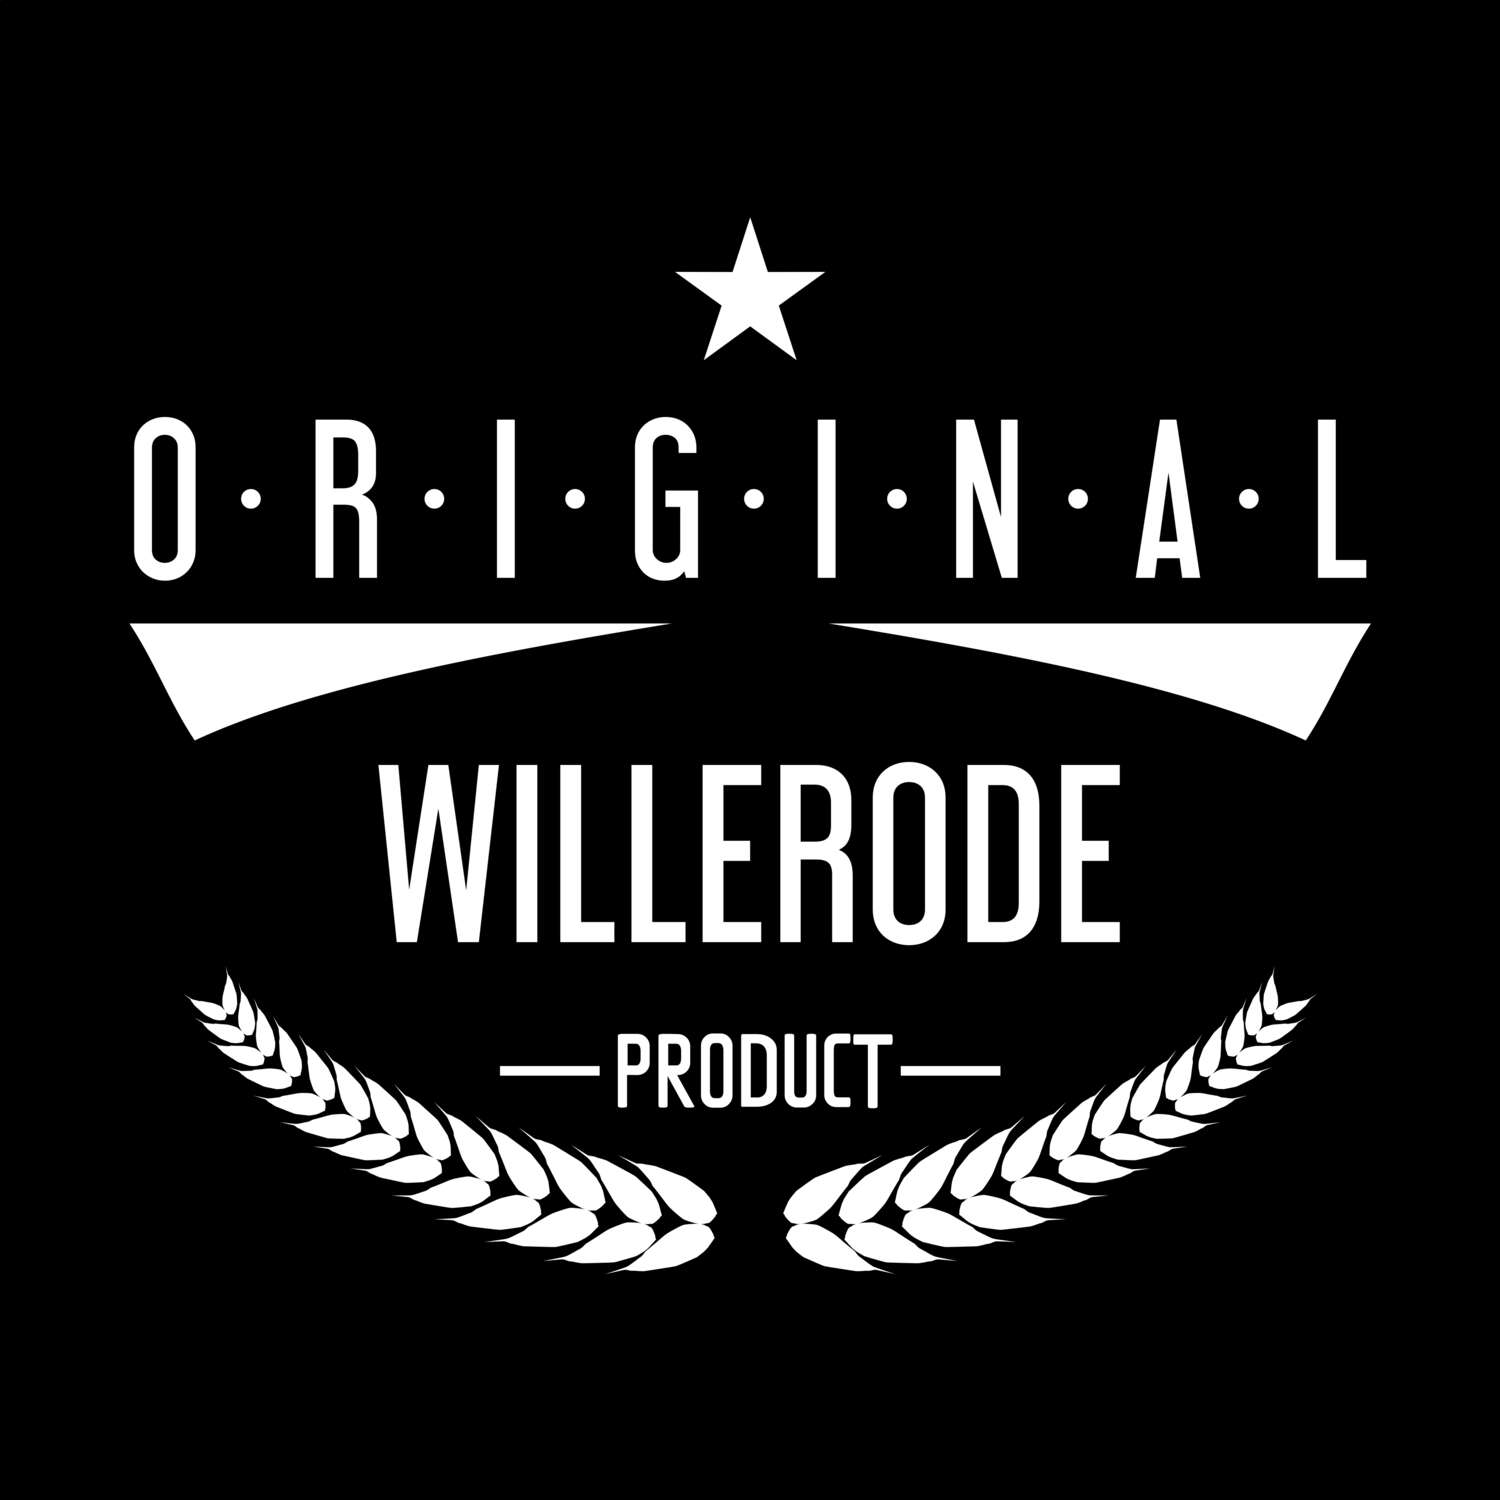 Willerode T-Shirt »Original Product«